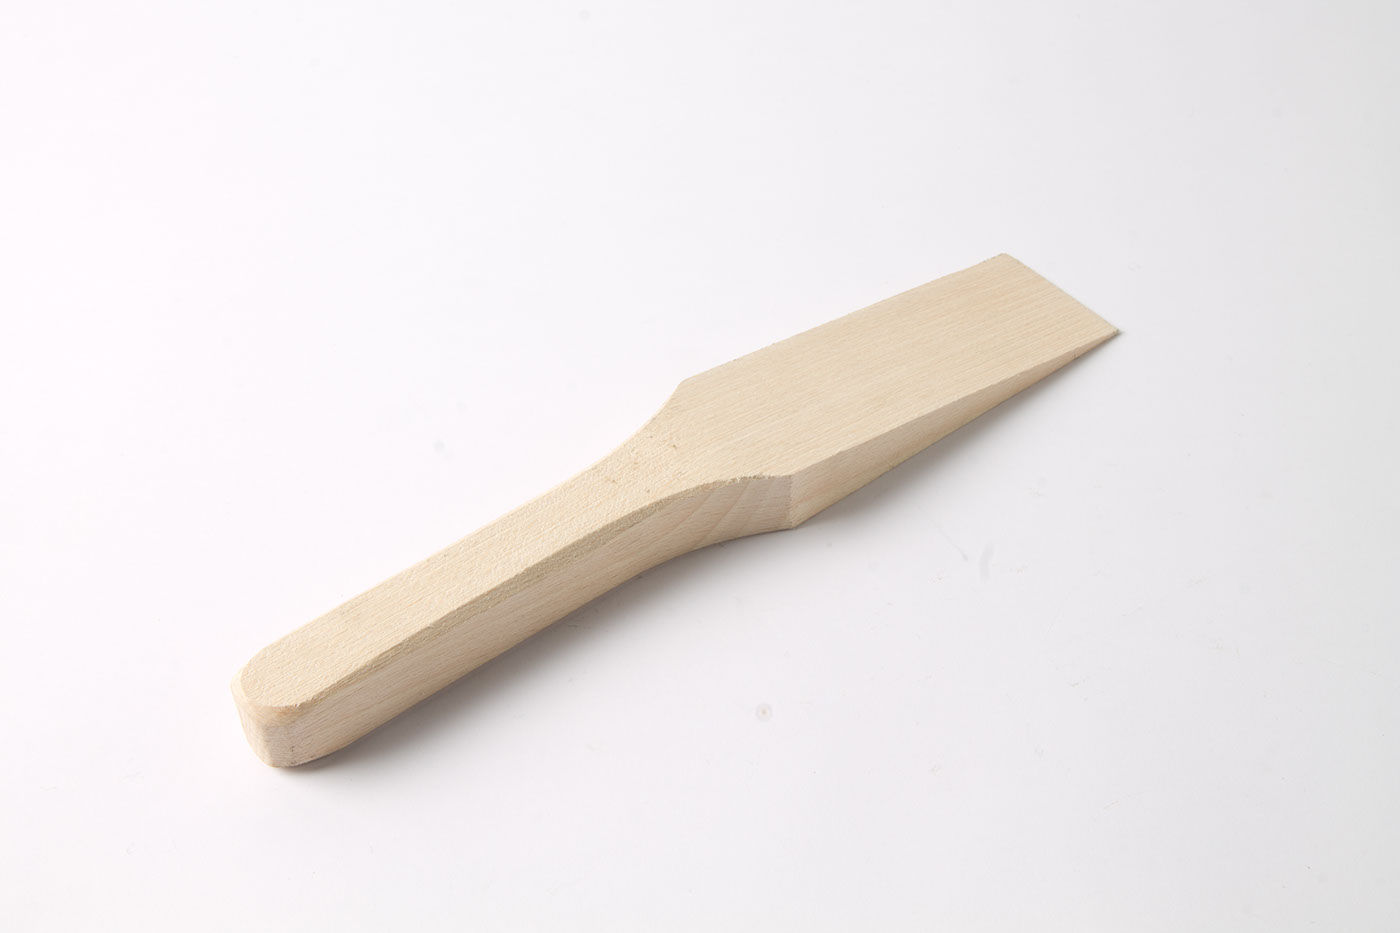 Holzspachtel
Wooden paddle